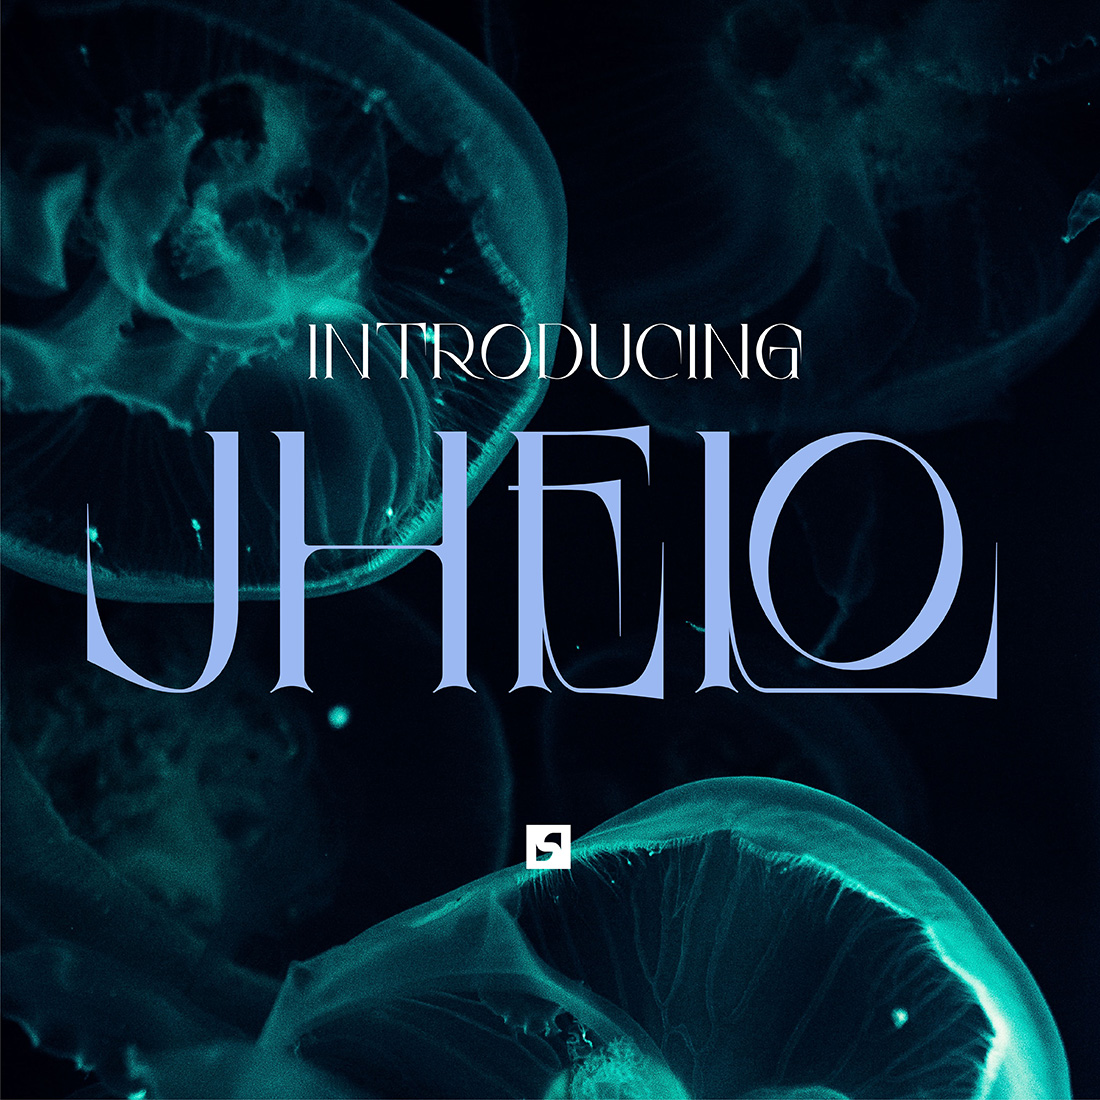 JHELO - Serif Font cover image.